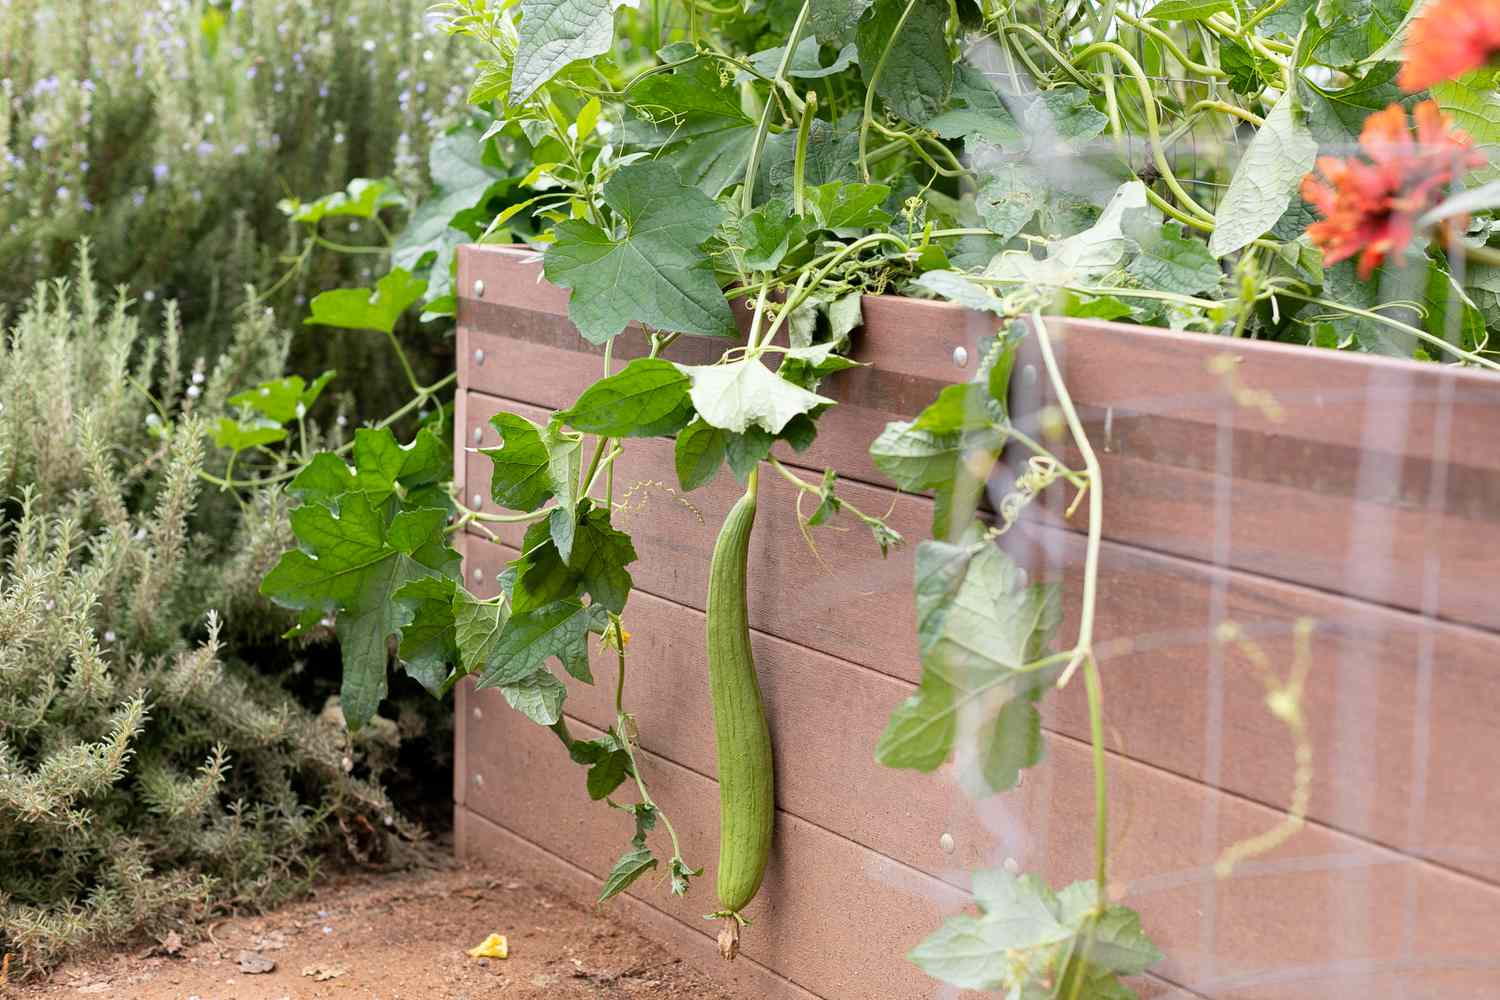 Luffa plant gourd on vine hanging over raised garden box